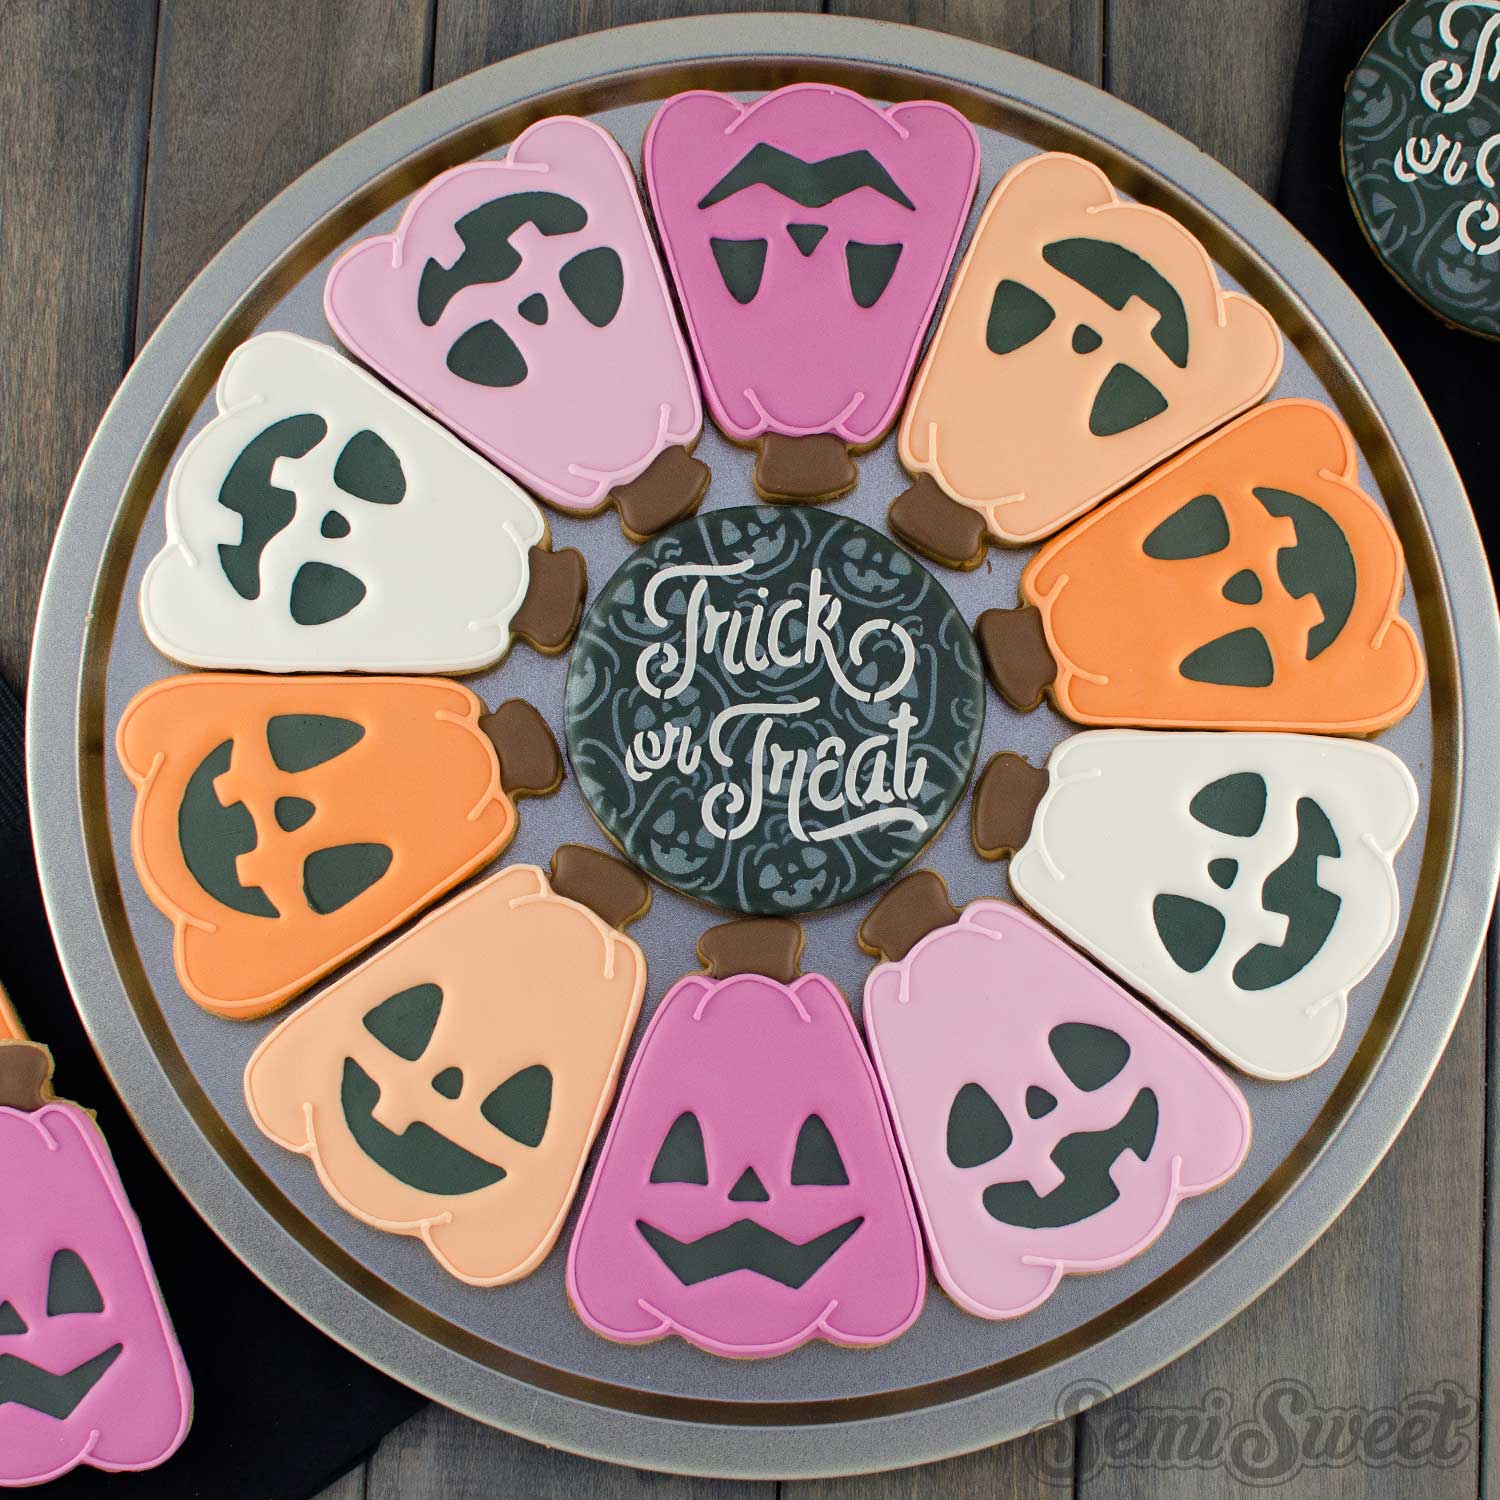 jack-o'-lantern cookie platter | Semi Sweet Designs